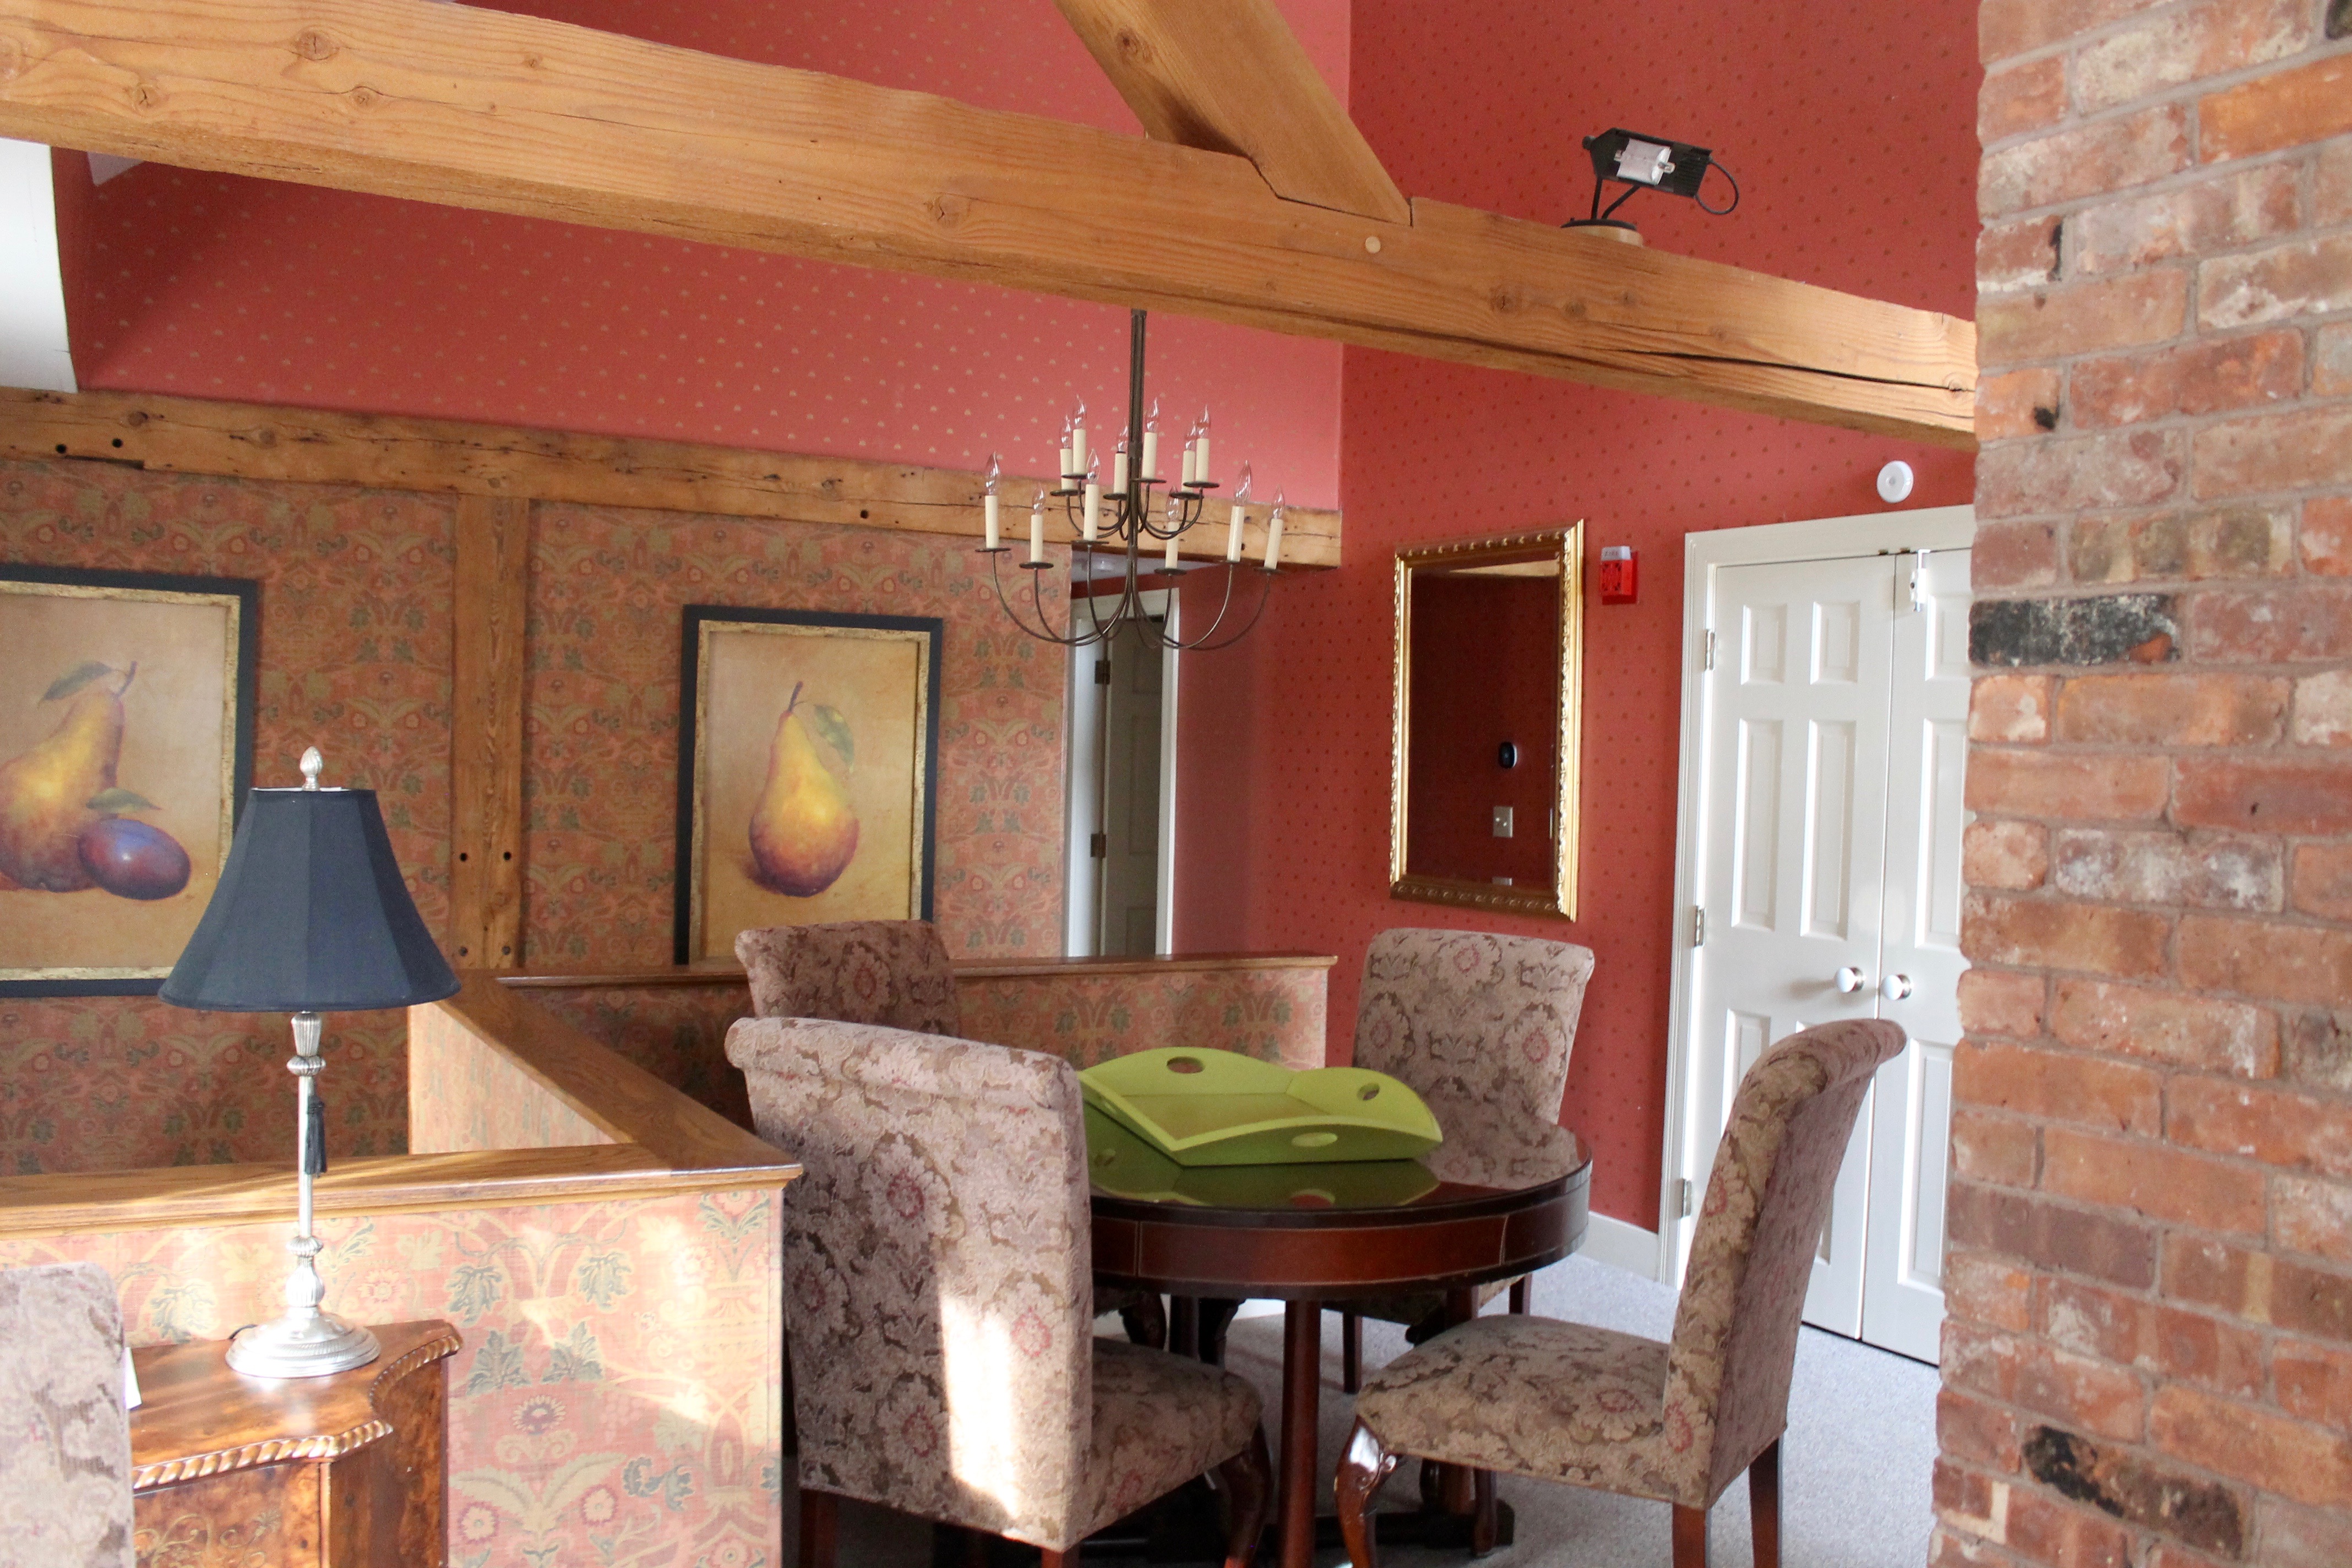 Bedford Village Inn's Apartment suite dining room | Market Street Petite blog